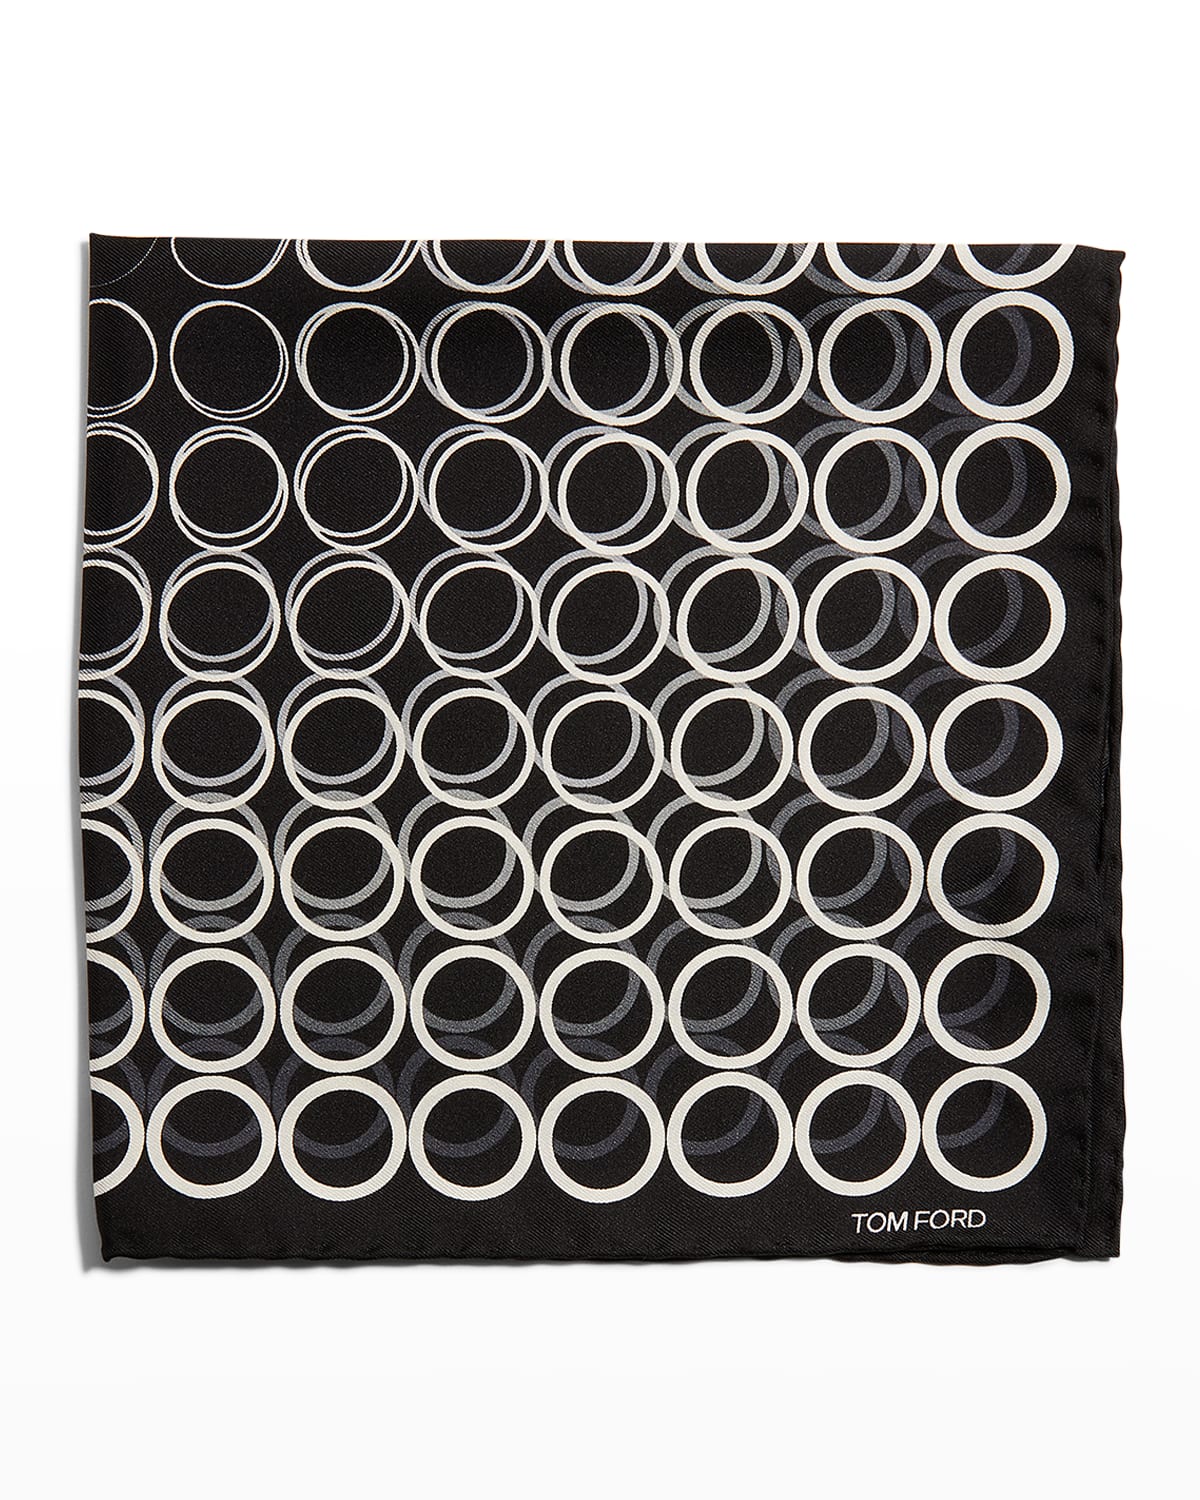 NEU 180 $ Tom Ford schwarz Weiß Dot Print silk pocket square